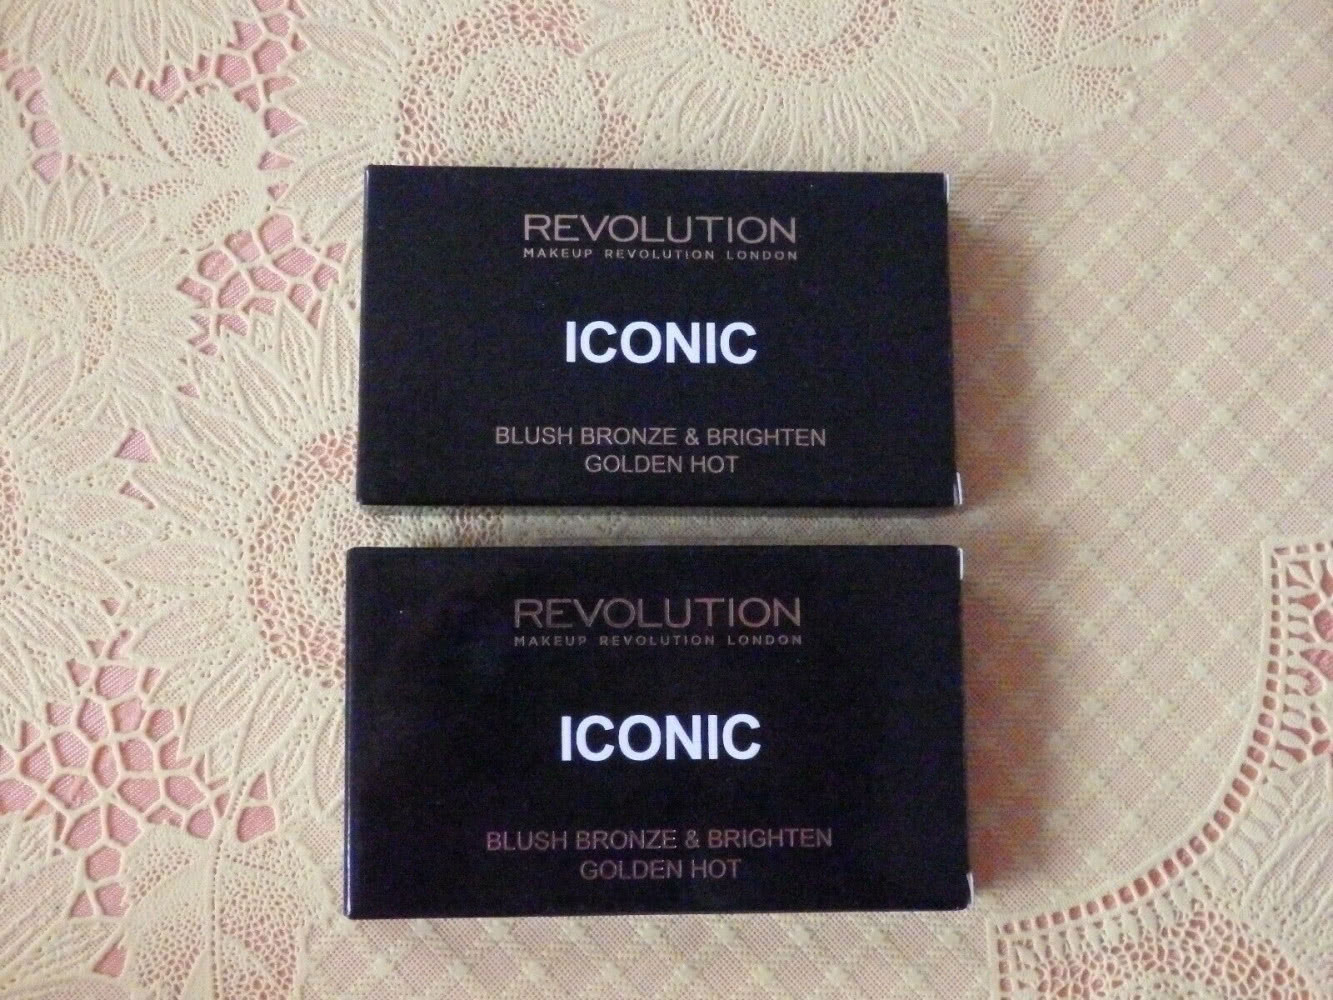 Makeup Revolution Iconic Blush Bronze & Brighten in Golden Hot 2x 11g НОВИНКА!